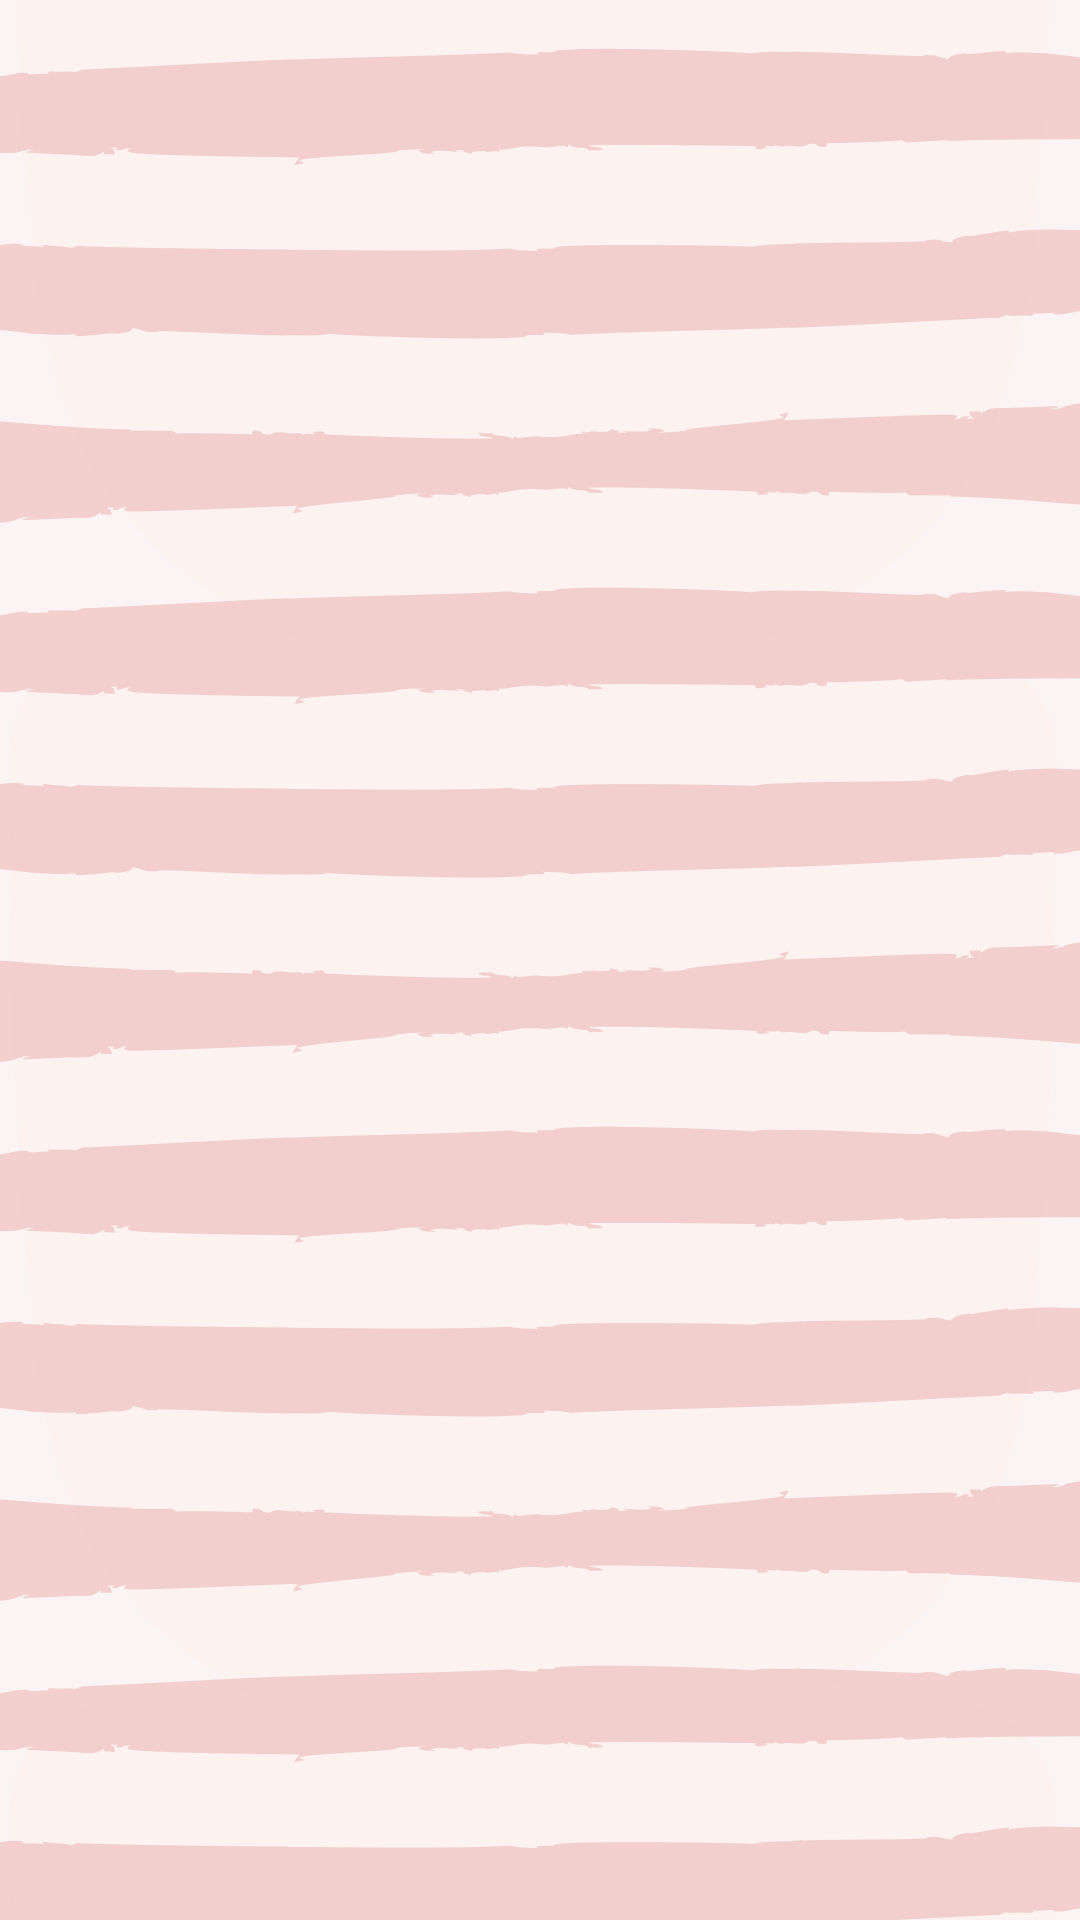 Pastel pink striped pattern